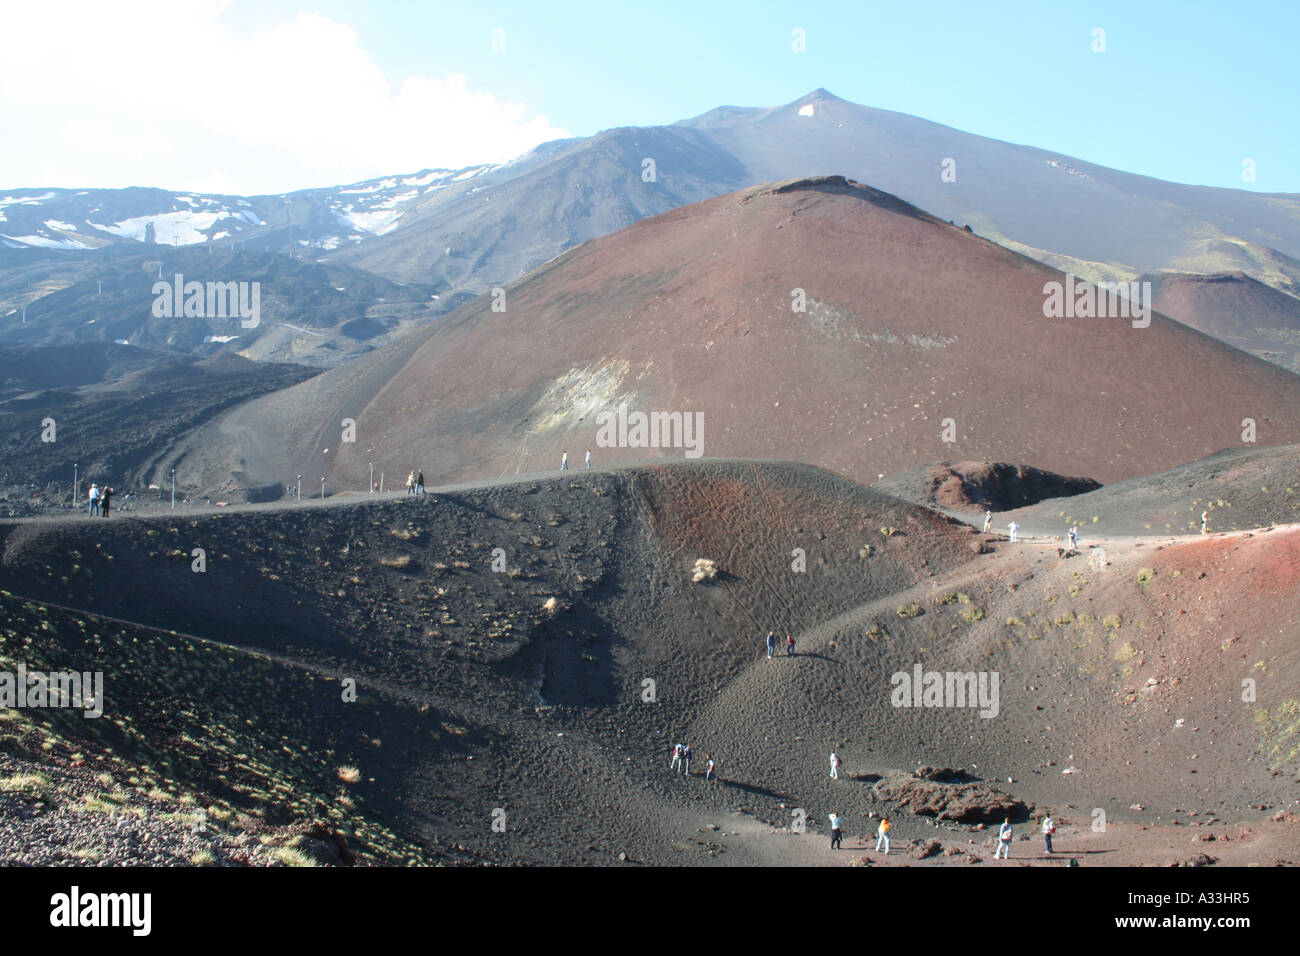 Die Monti Silvestri, alten Vulkankegel an den Hängen des Ätna, Sizilien, Italien, höchsten aktiven Vulkan Europas. Stockfoto